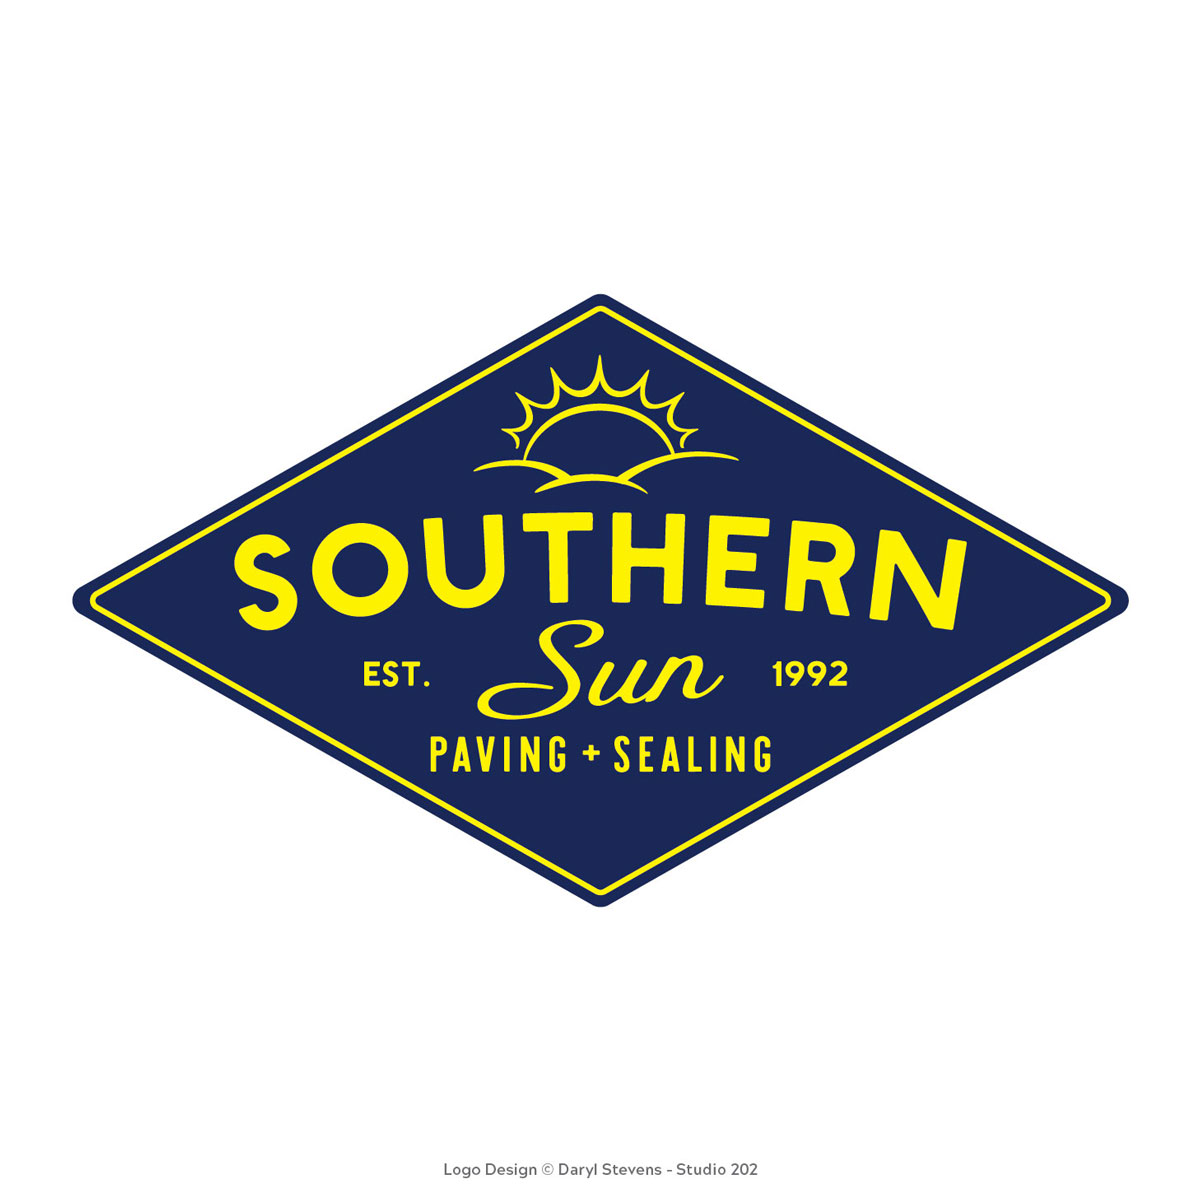 Southern Sun business branding by Daryl Stevens